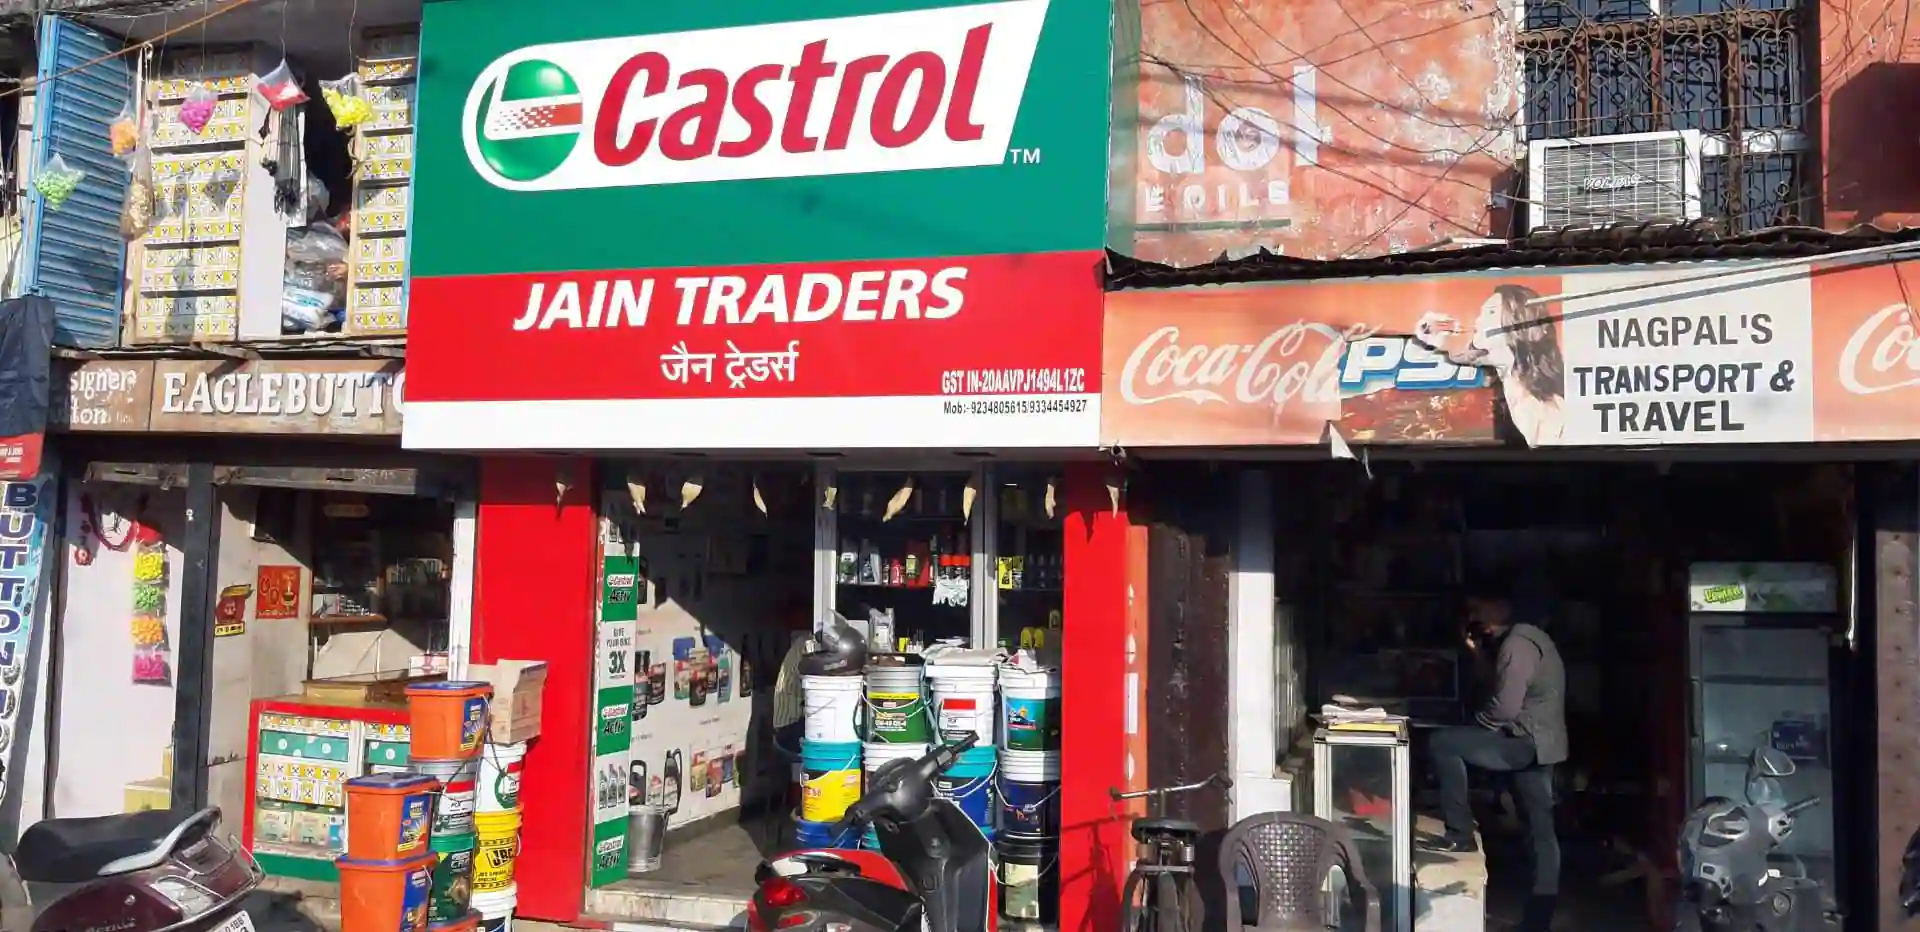 jain-traders-upper-bazar-ranchi-lubricant-dealers-castrol-07ddc1rro3